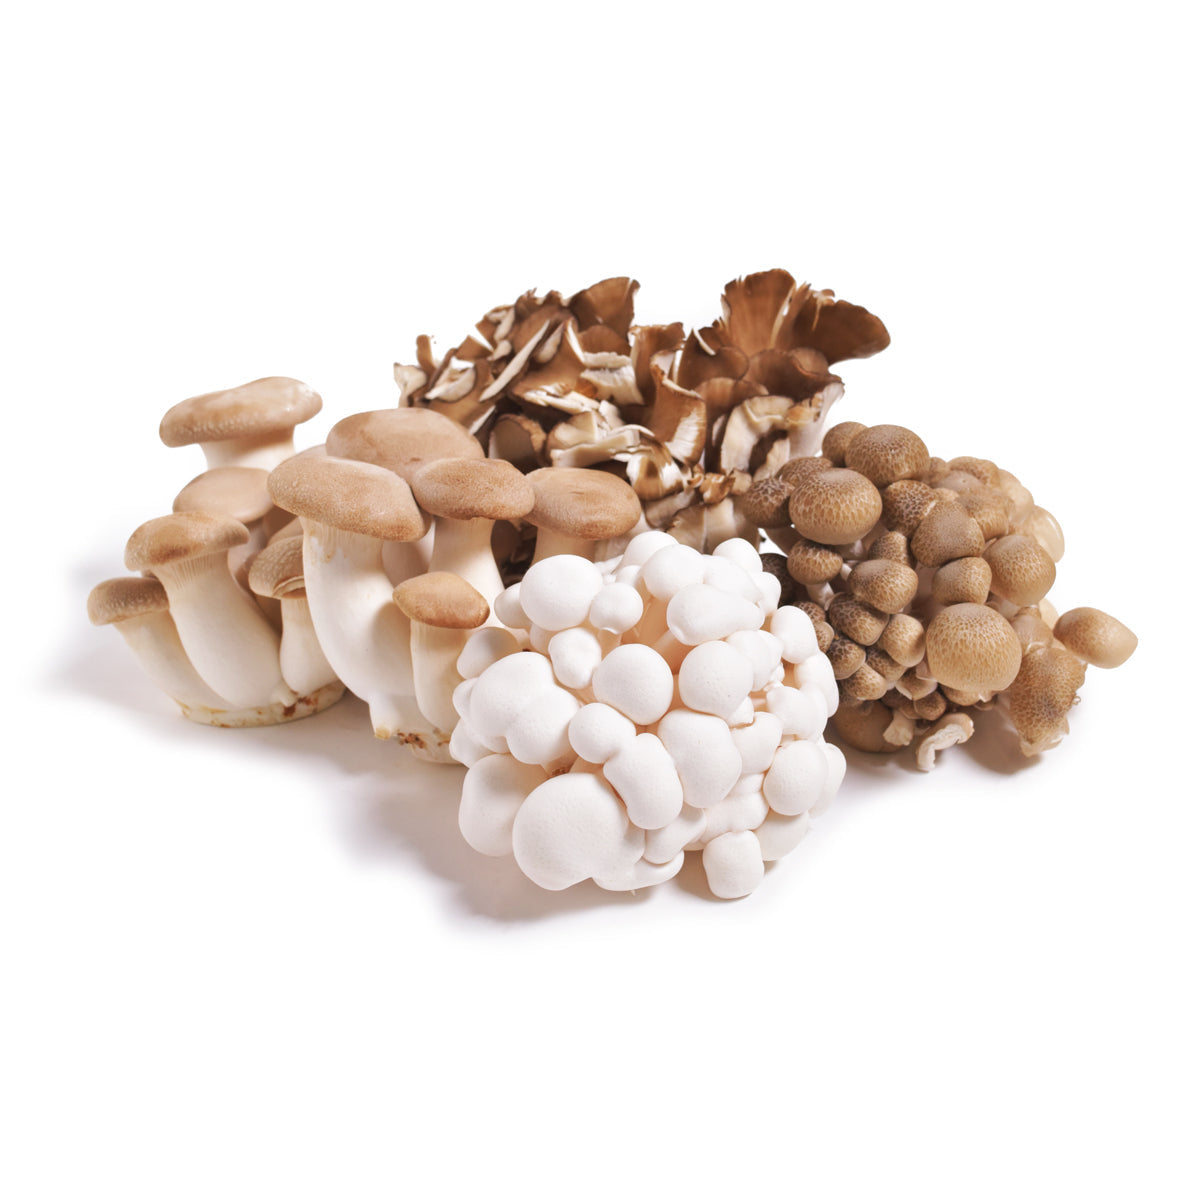 Mycopia Organic Chef's Mix Mushrooms